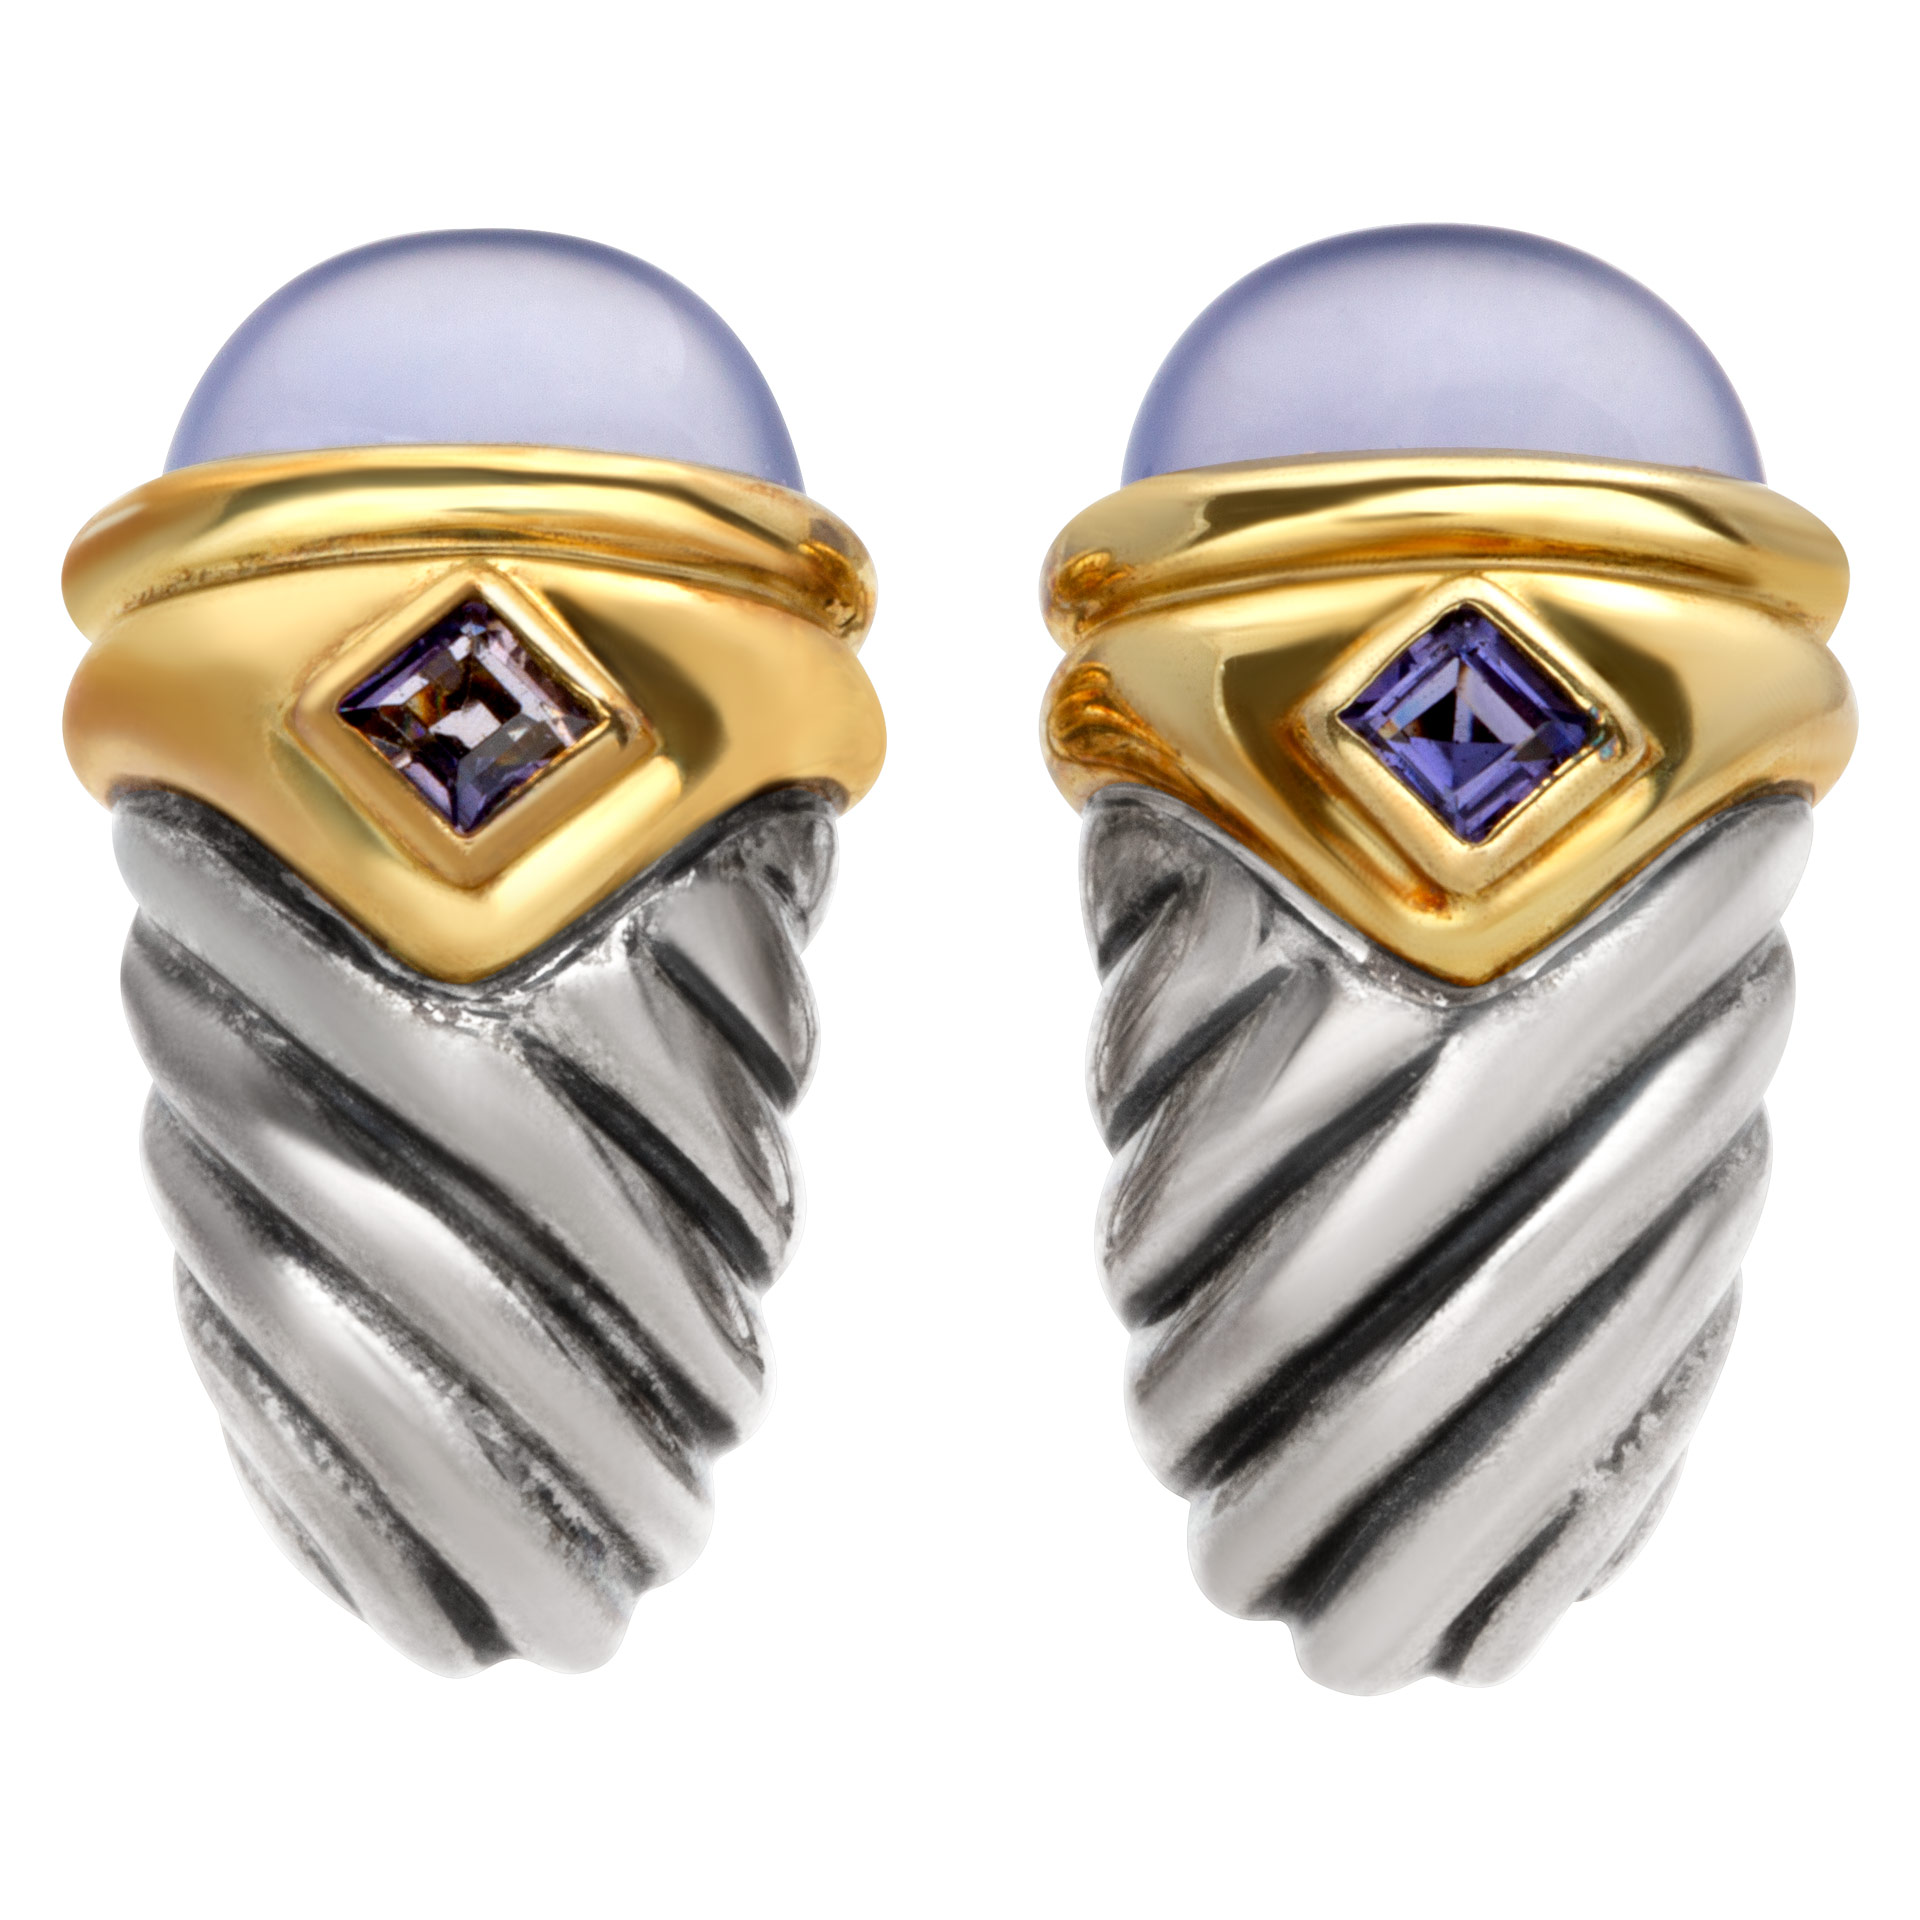 David Yurman Renaissance Shrimp earrings image 1